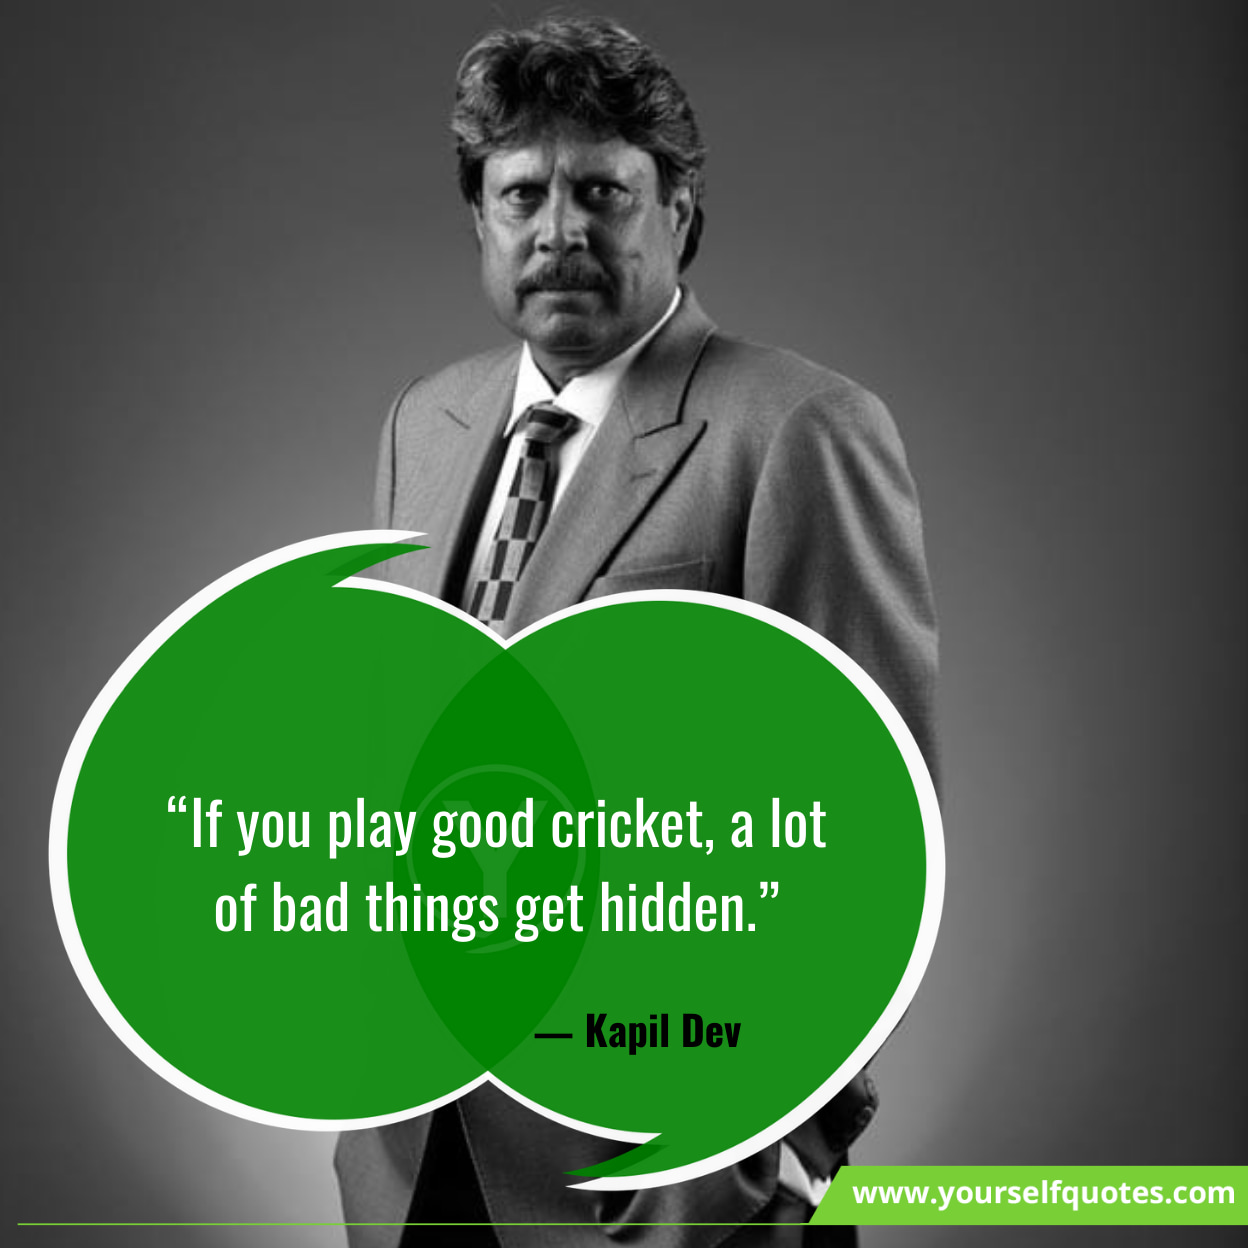 Kapil Dev Quotes On Cricket